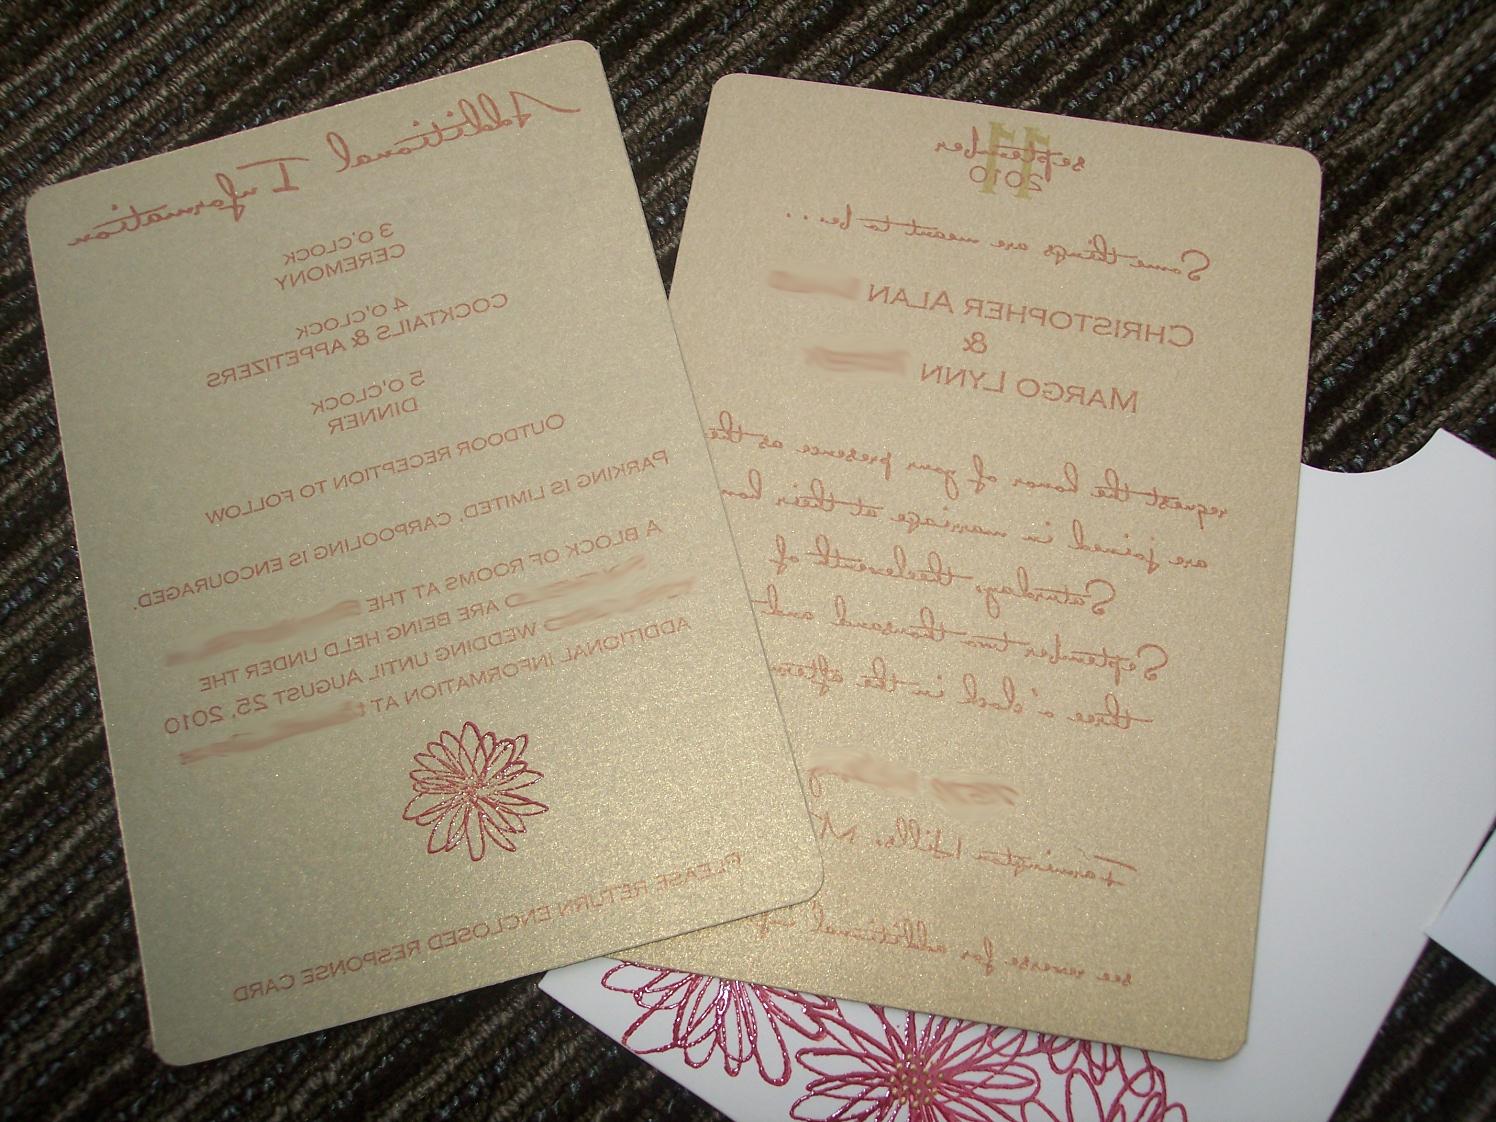 Peacock wedding invitations!